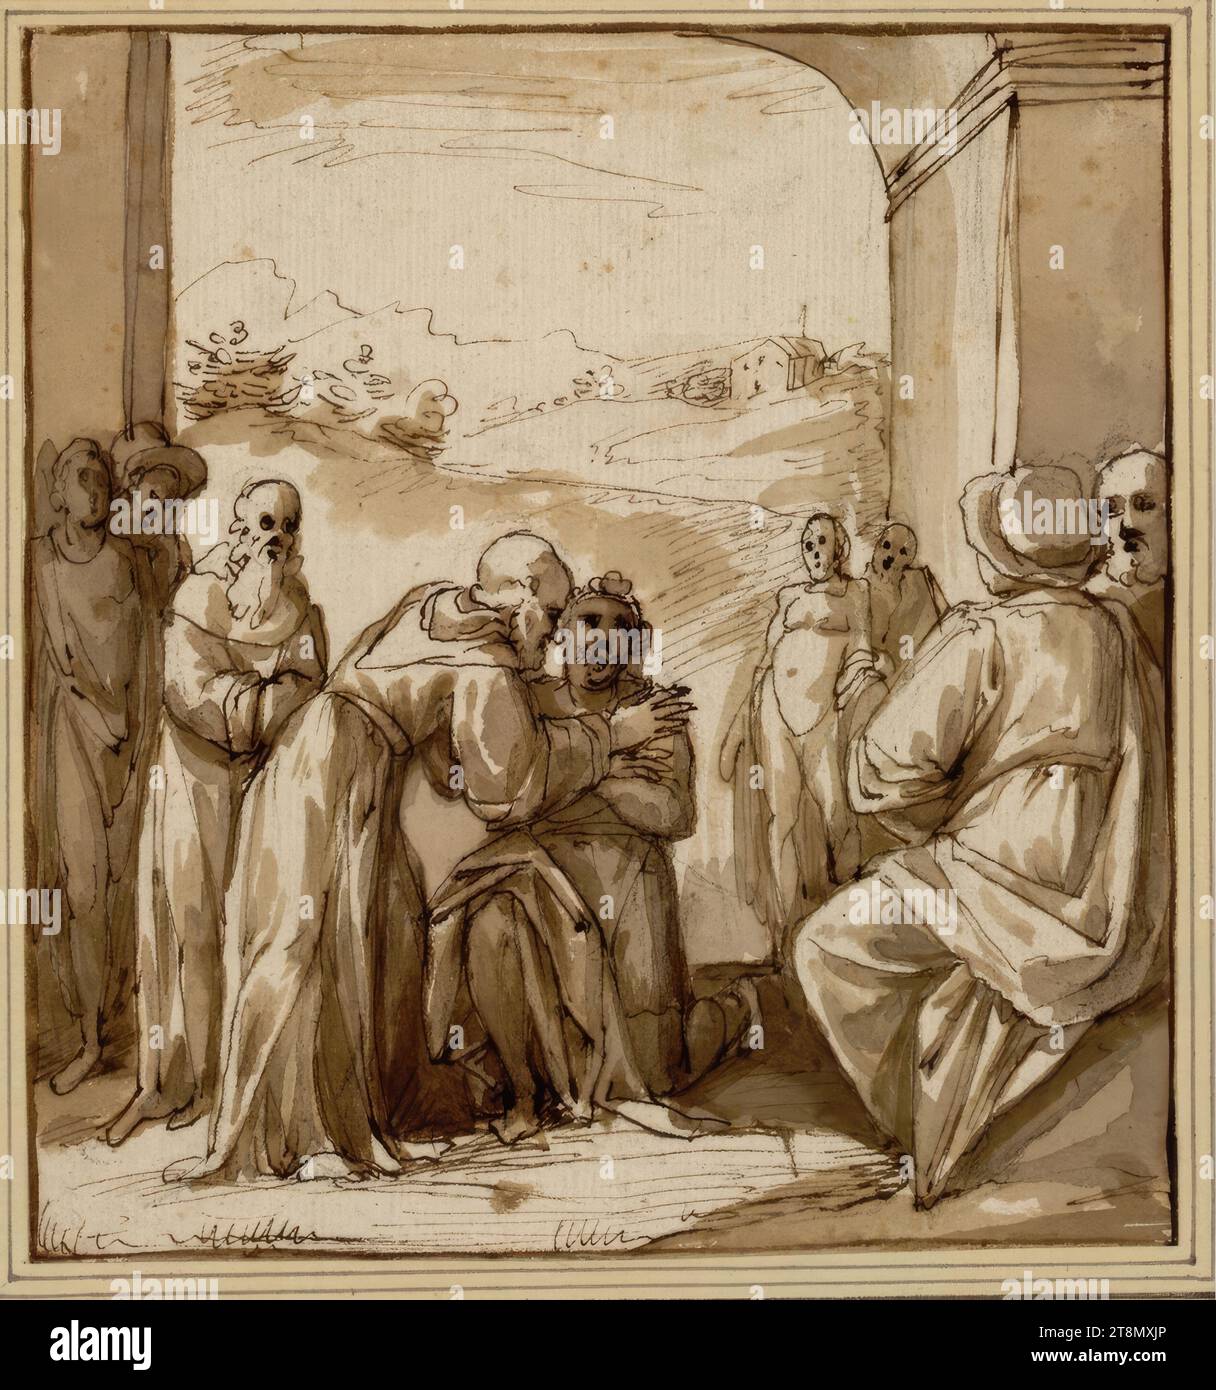 Saint Francis heals a sick person in Spoleto, Domenico Cresti called Passignano (Badia a Passignano (Tavarnelle Val di Pesa) 1559 - 1638 Florence), drawing, pen, ink, washed, 16.8 x 15.7 cm, l.l. Duke Albert of Saxe-Teschen Stock Photo